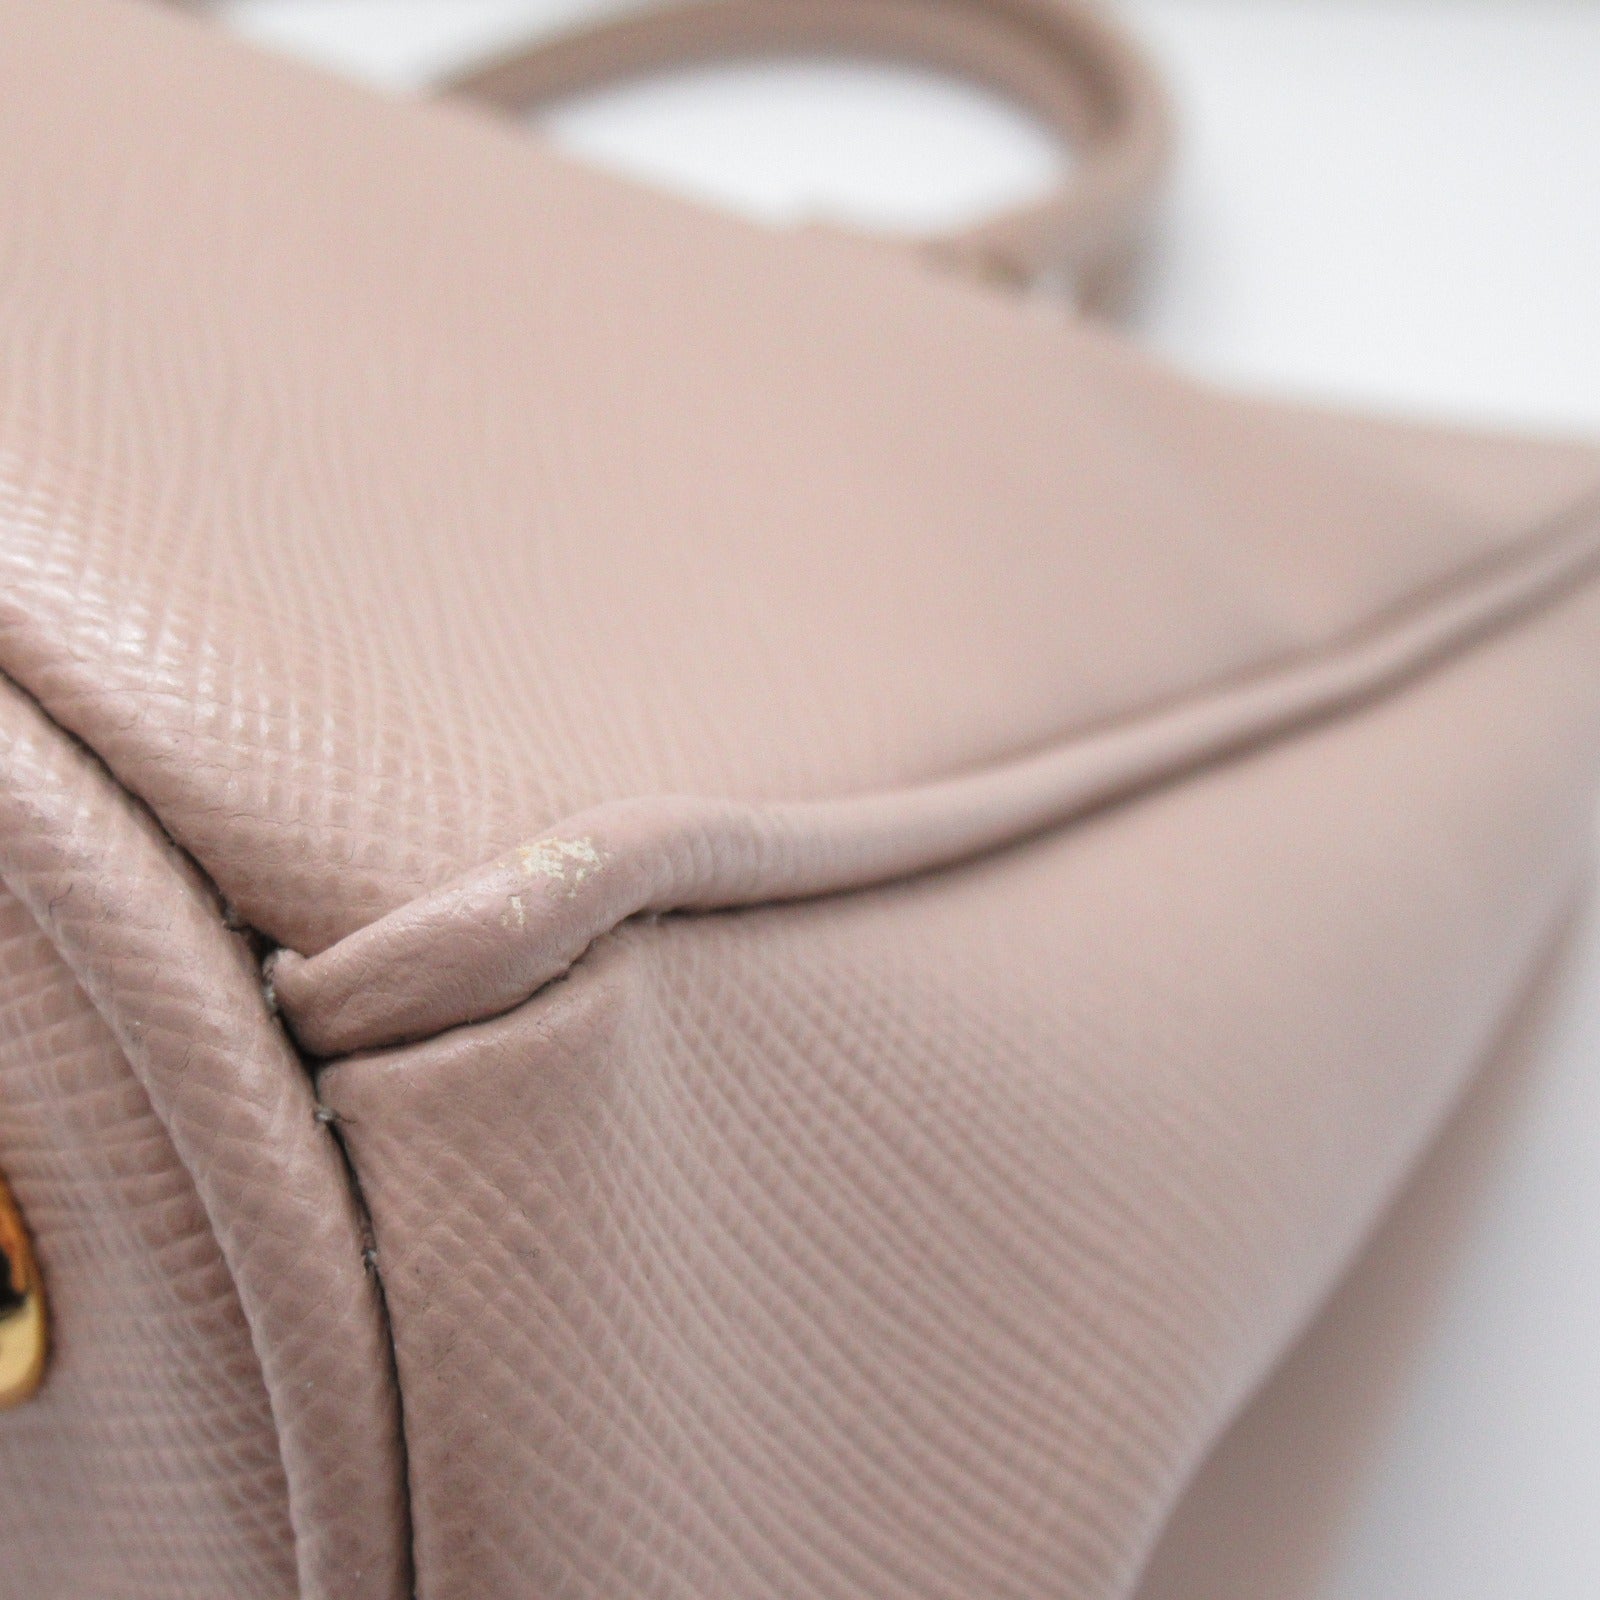 Prada Prada 2W Tote Bag Tortoise Bag Sapphire Leather  Pink Pink Beige 【Ancestral】